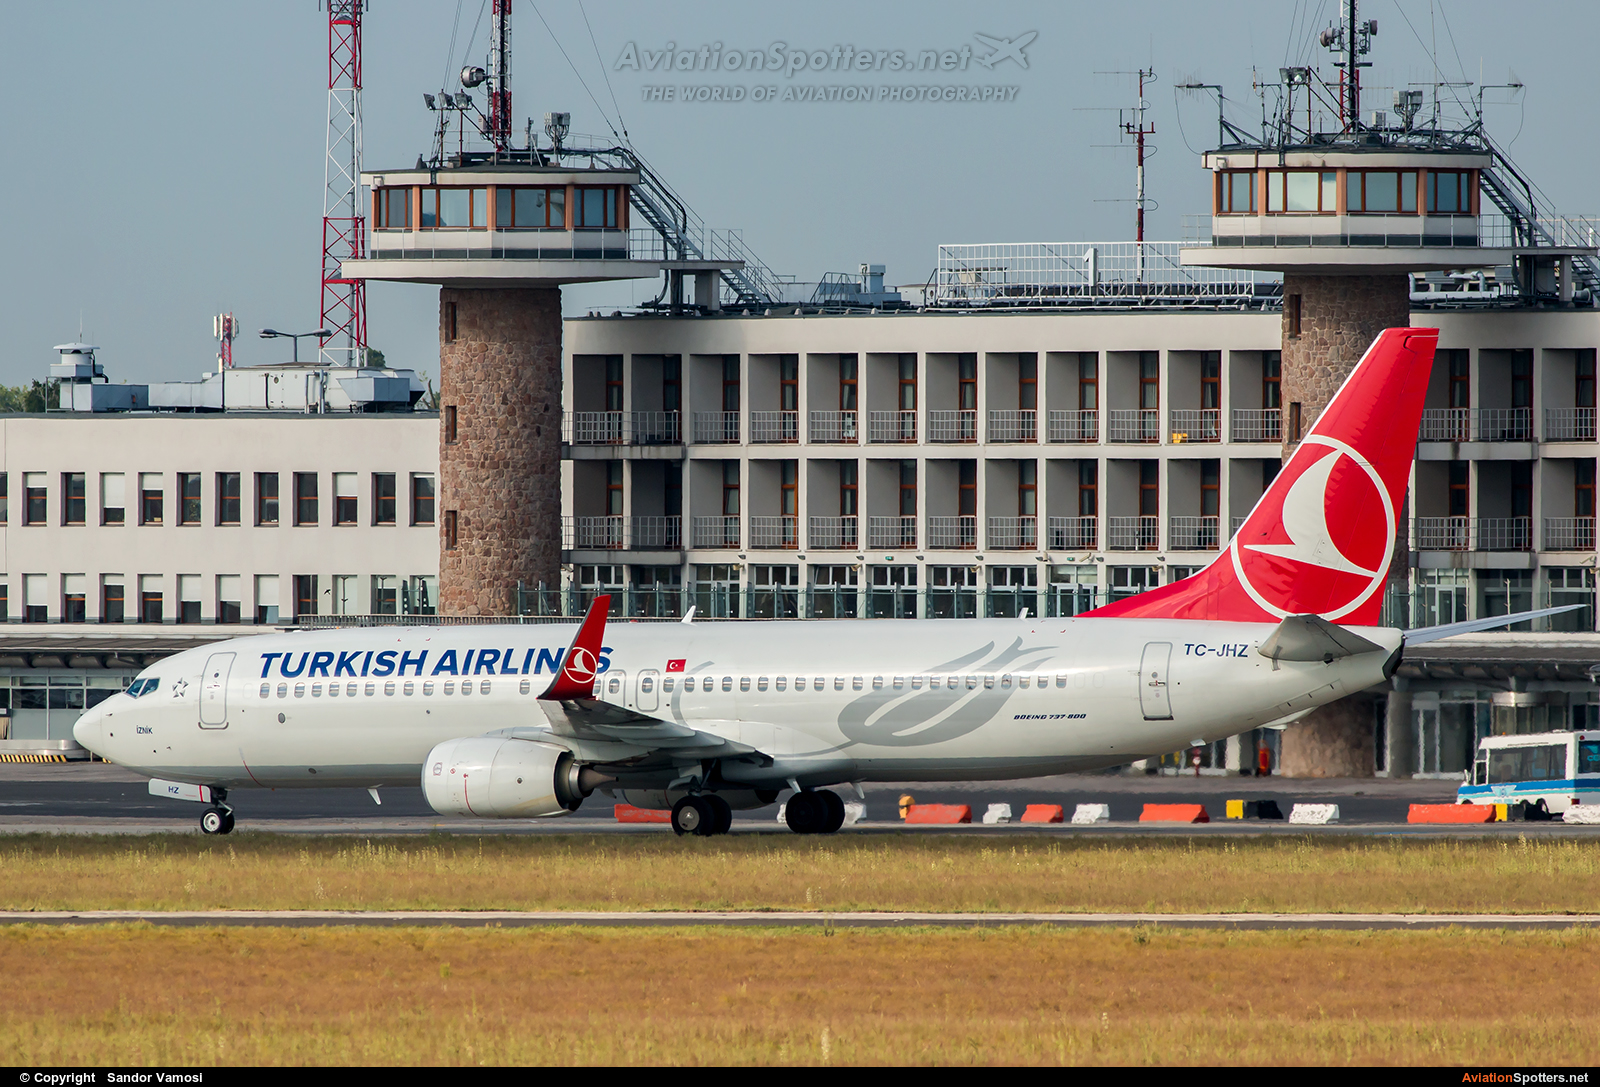 Turkish Airlines  -  737-800  (TC-JHZ) By Sandor Vamosi (ALEX67)